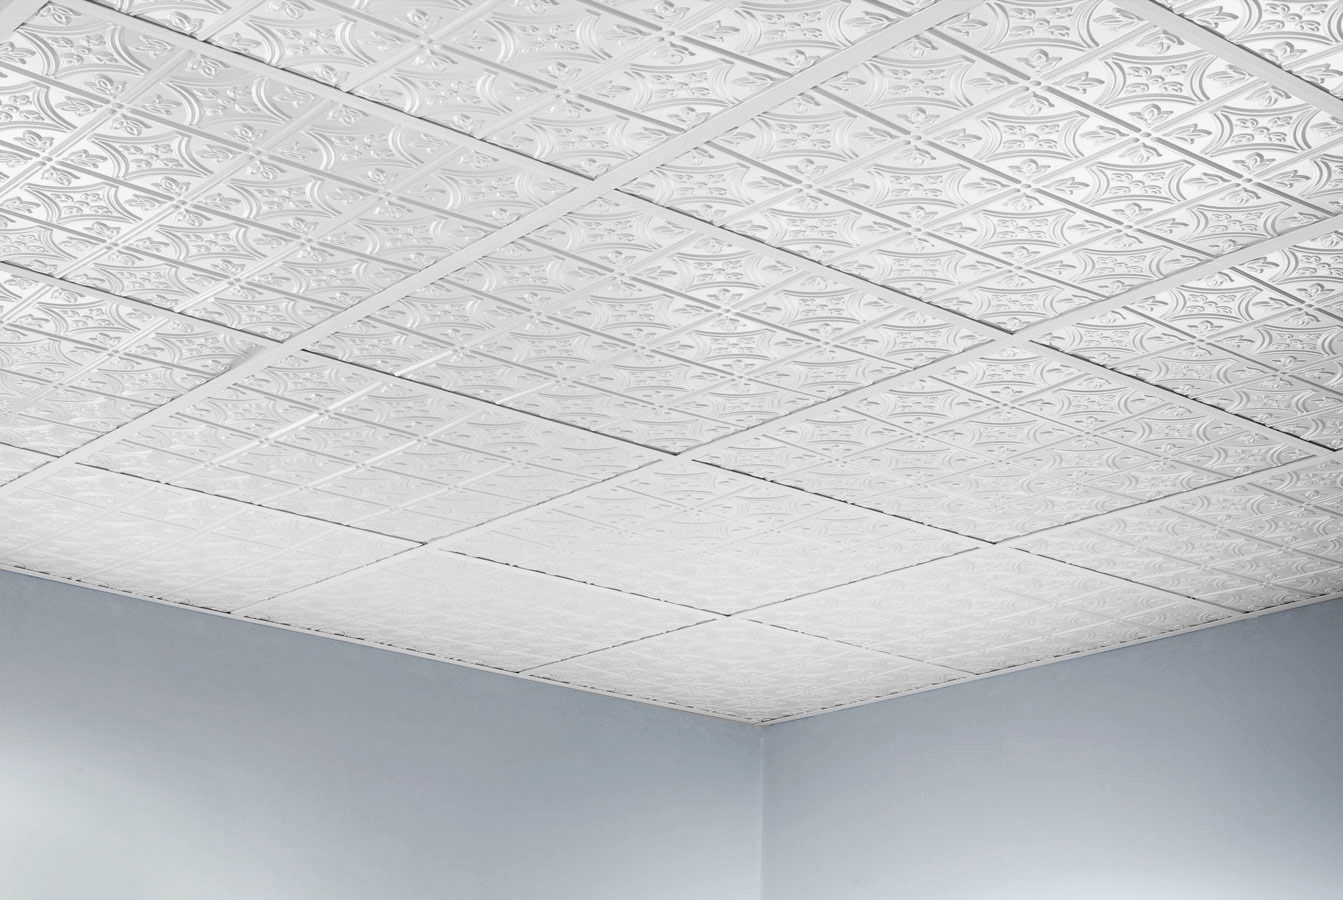 2×2 Ceiling Tile Designs